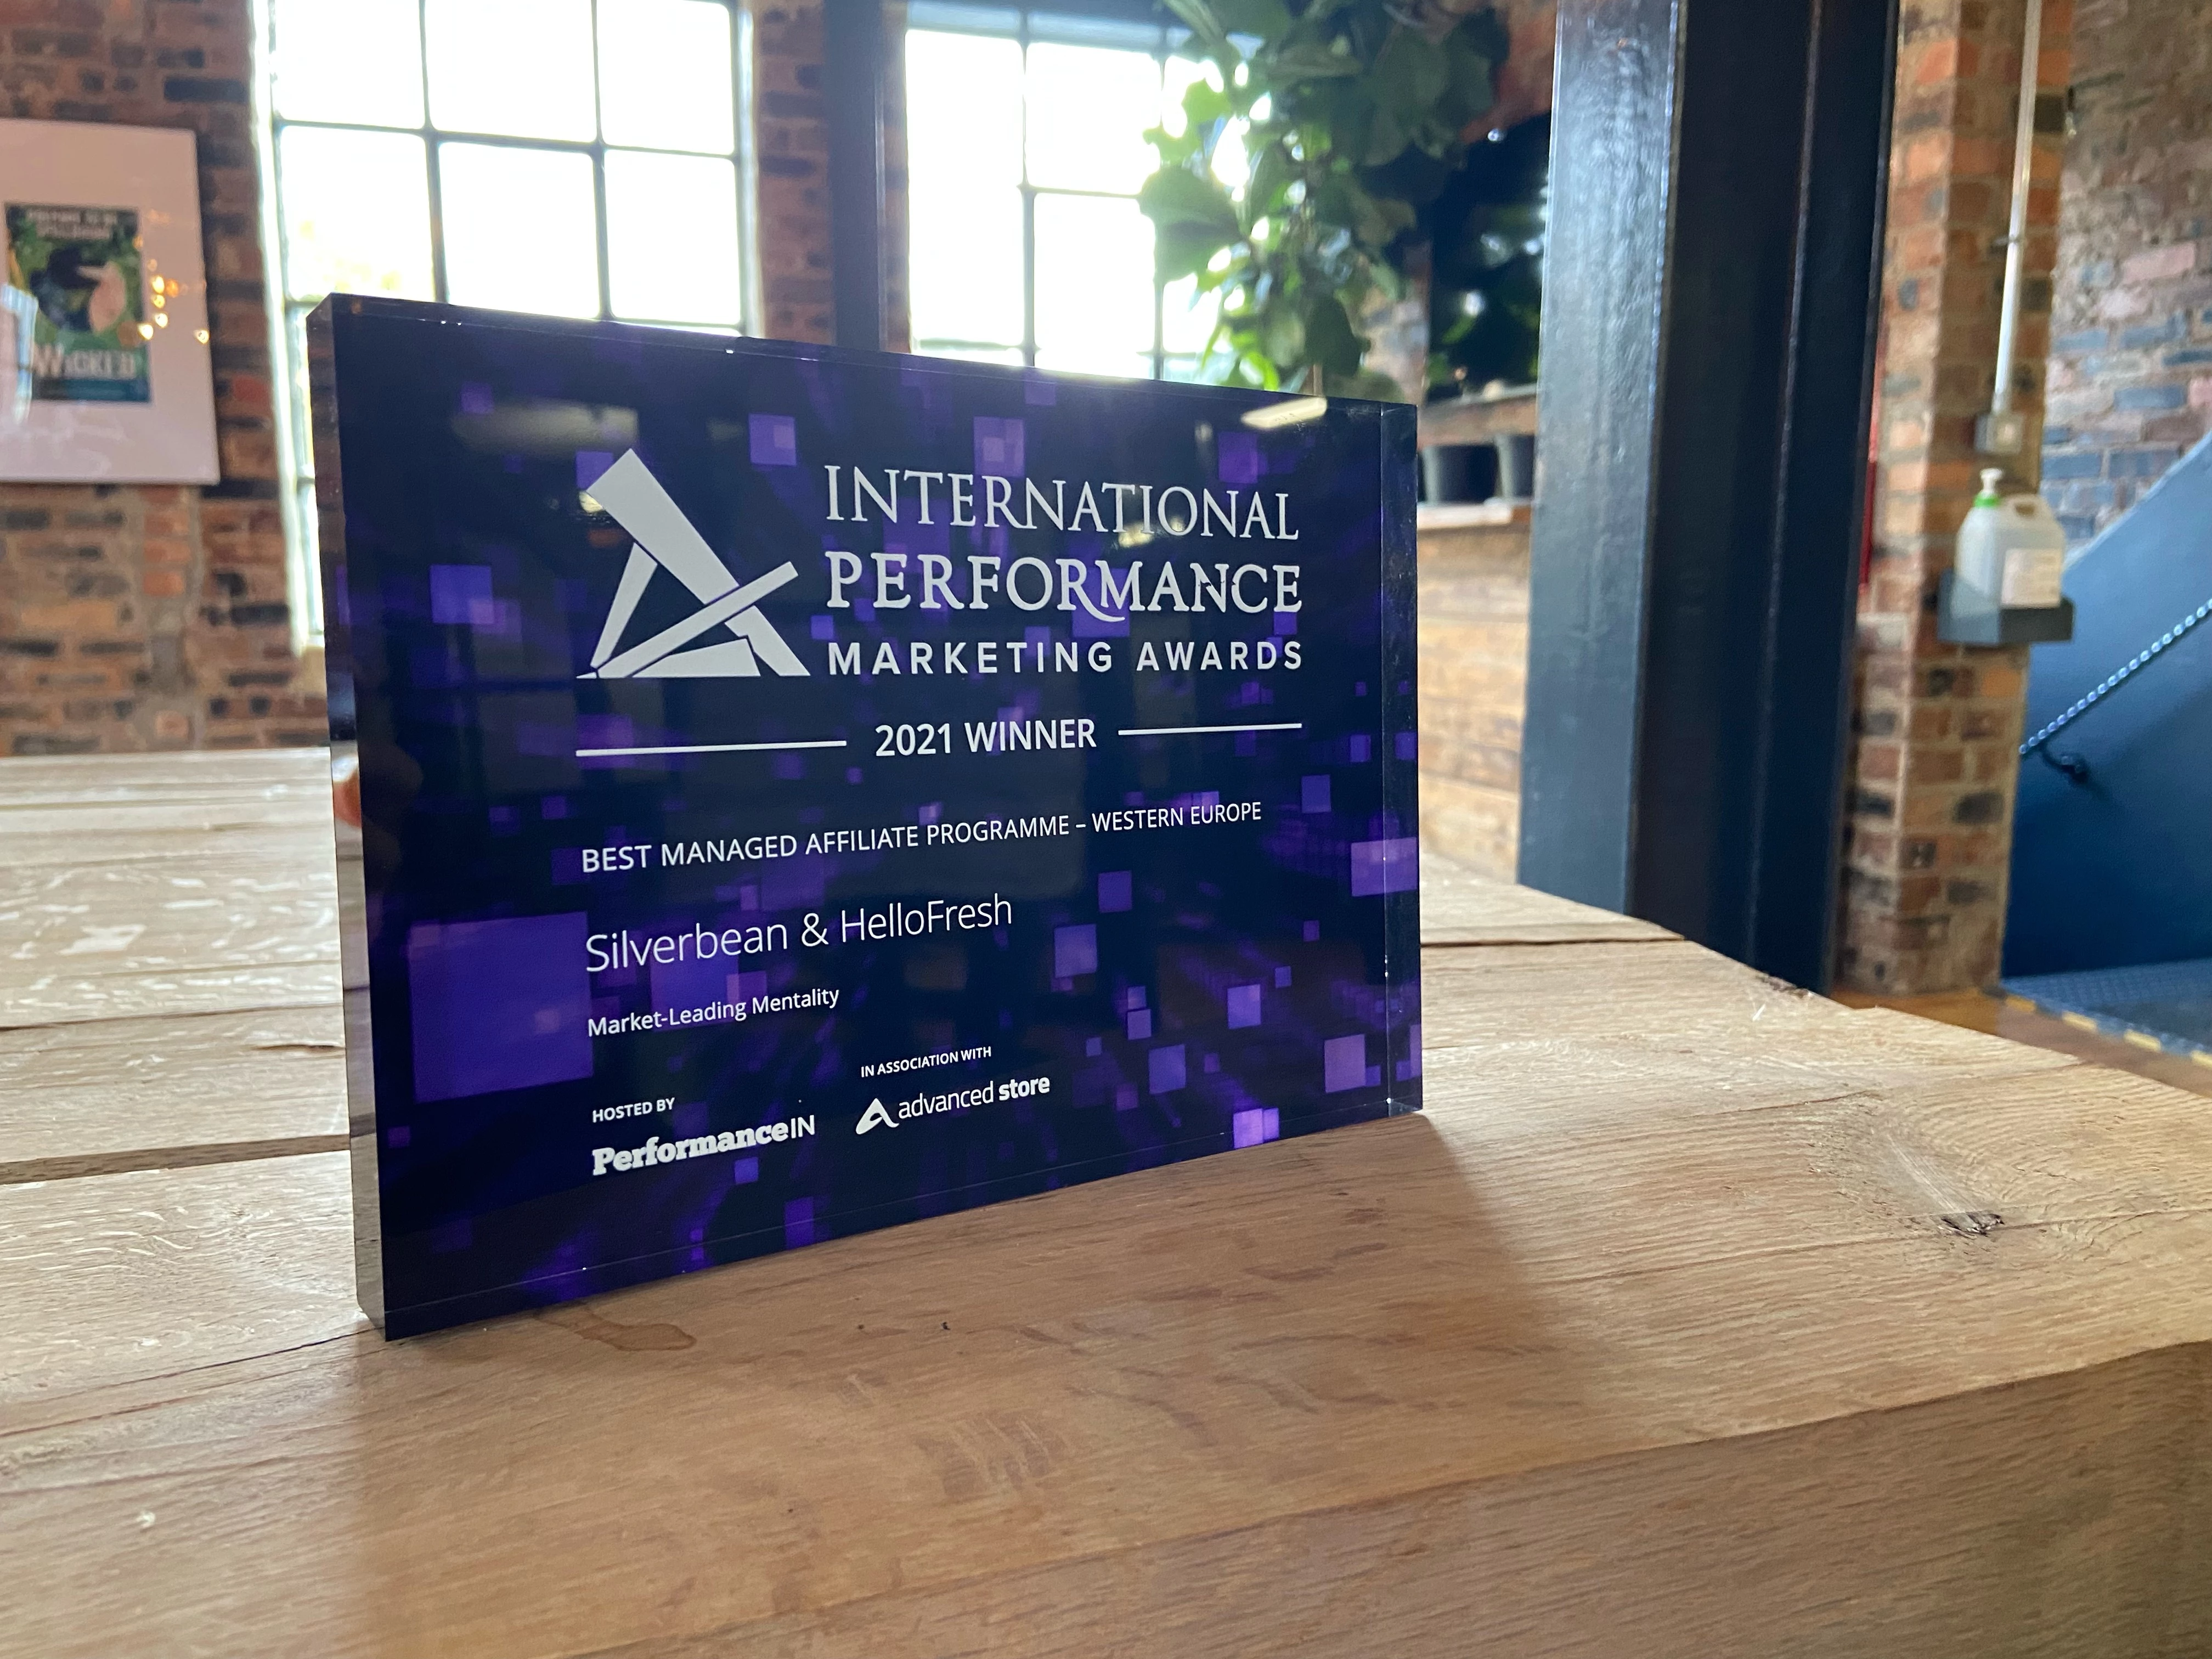 Silverbean and HelloFresh's award from the International Performance Marketing Awards